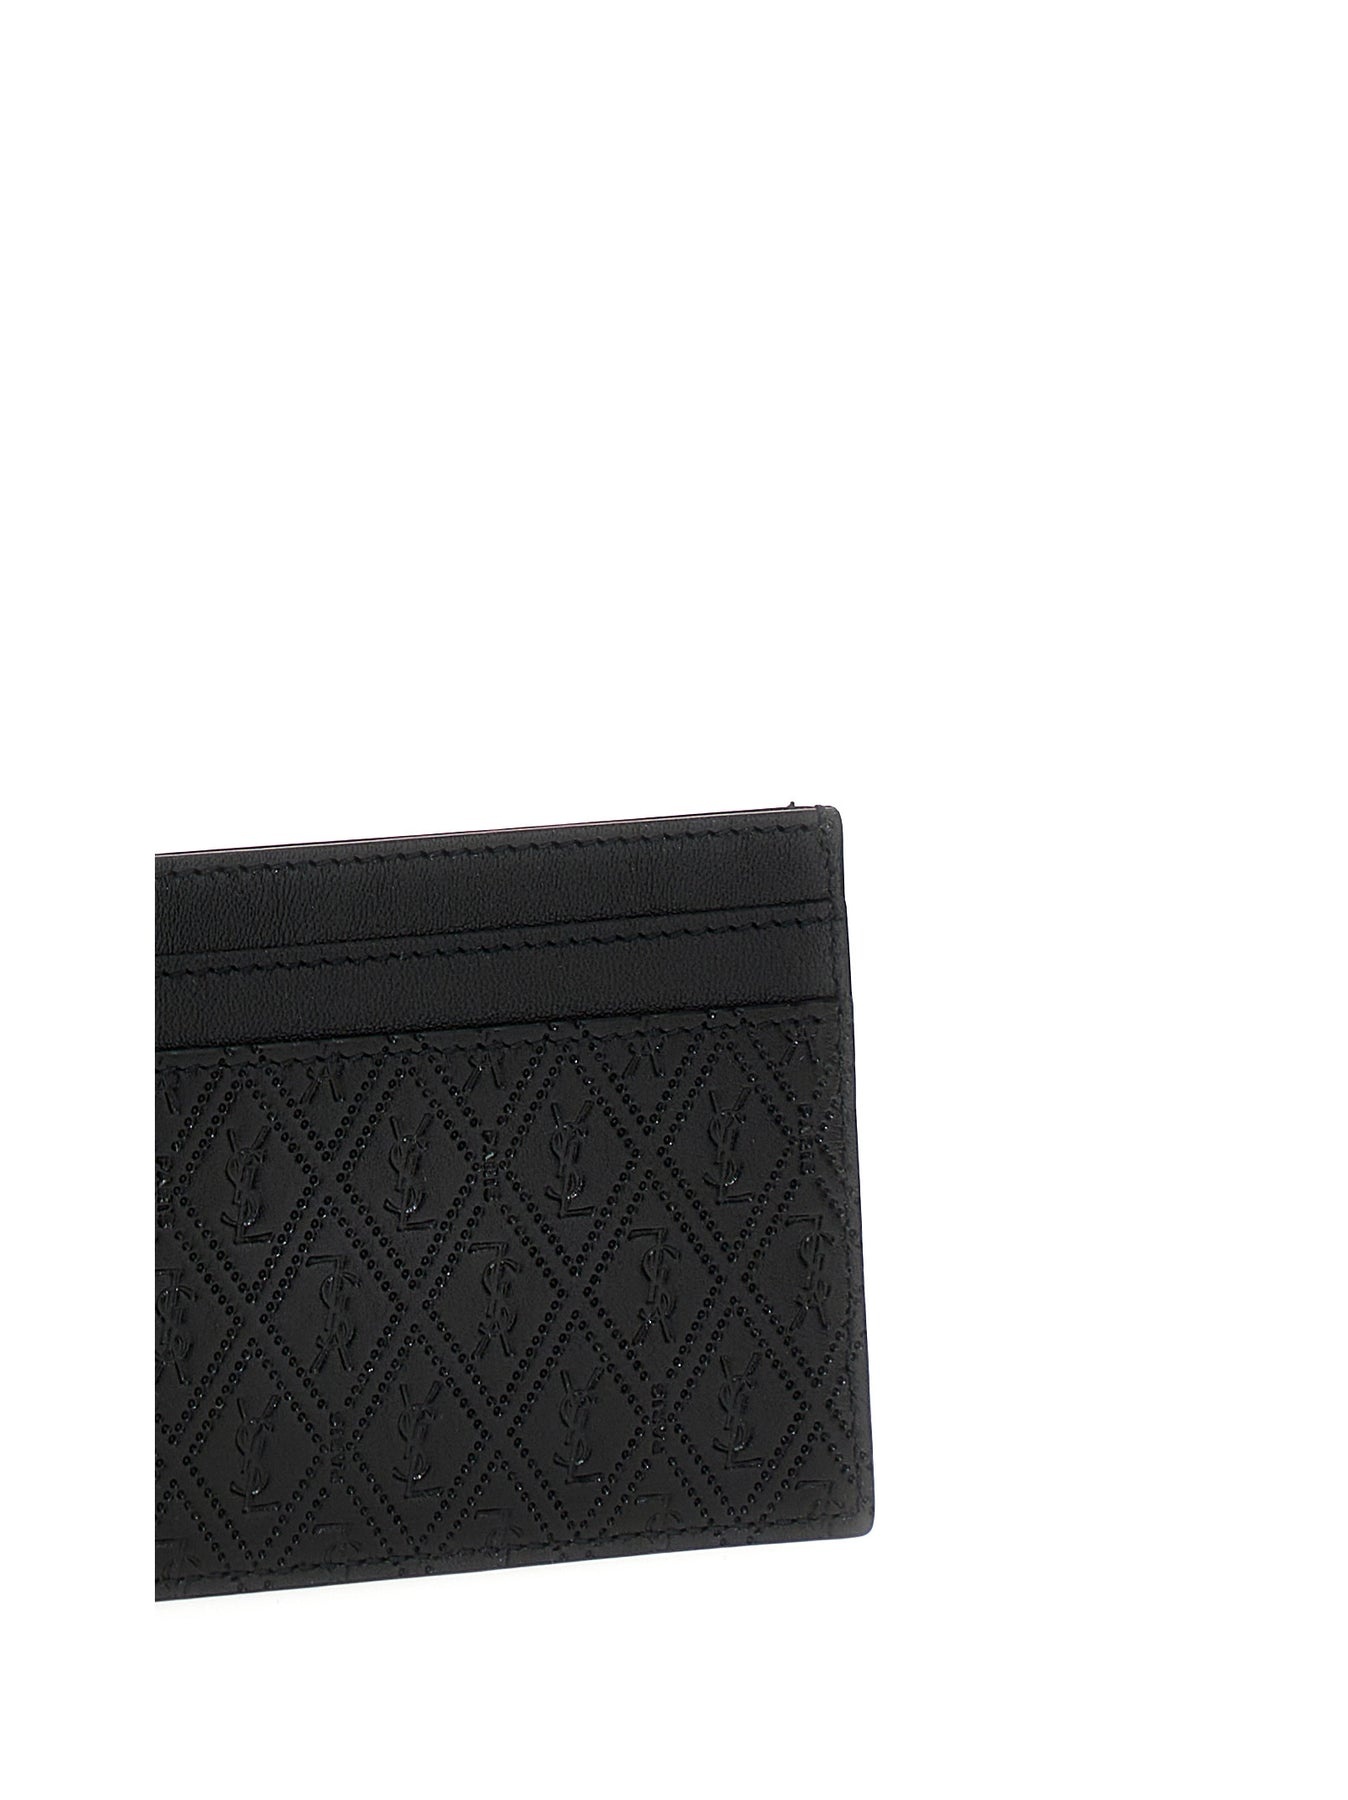 Le Monogramme Wallets, Card Holders Black - 3